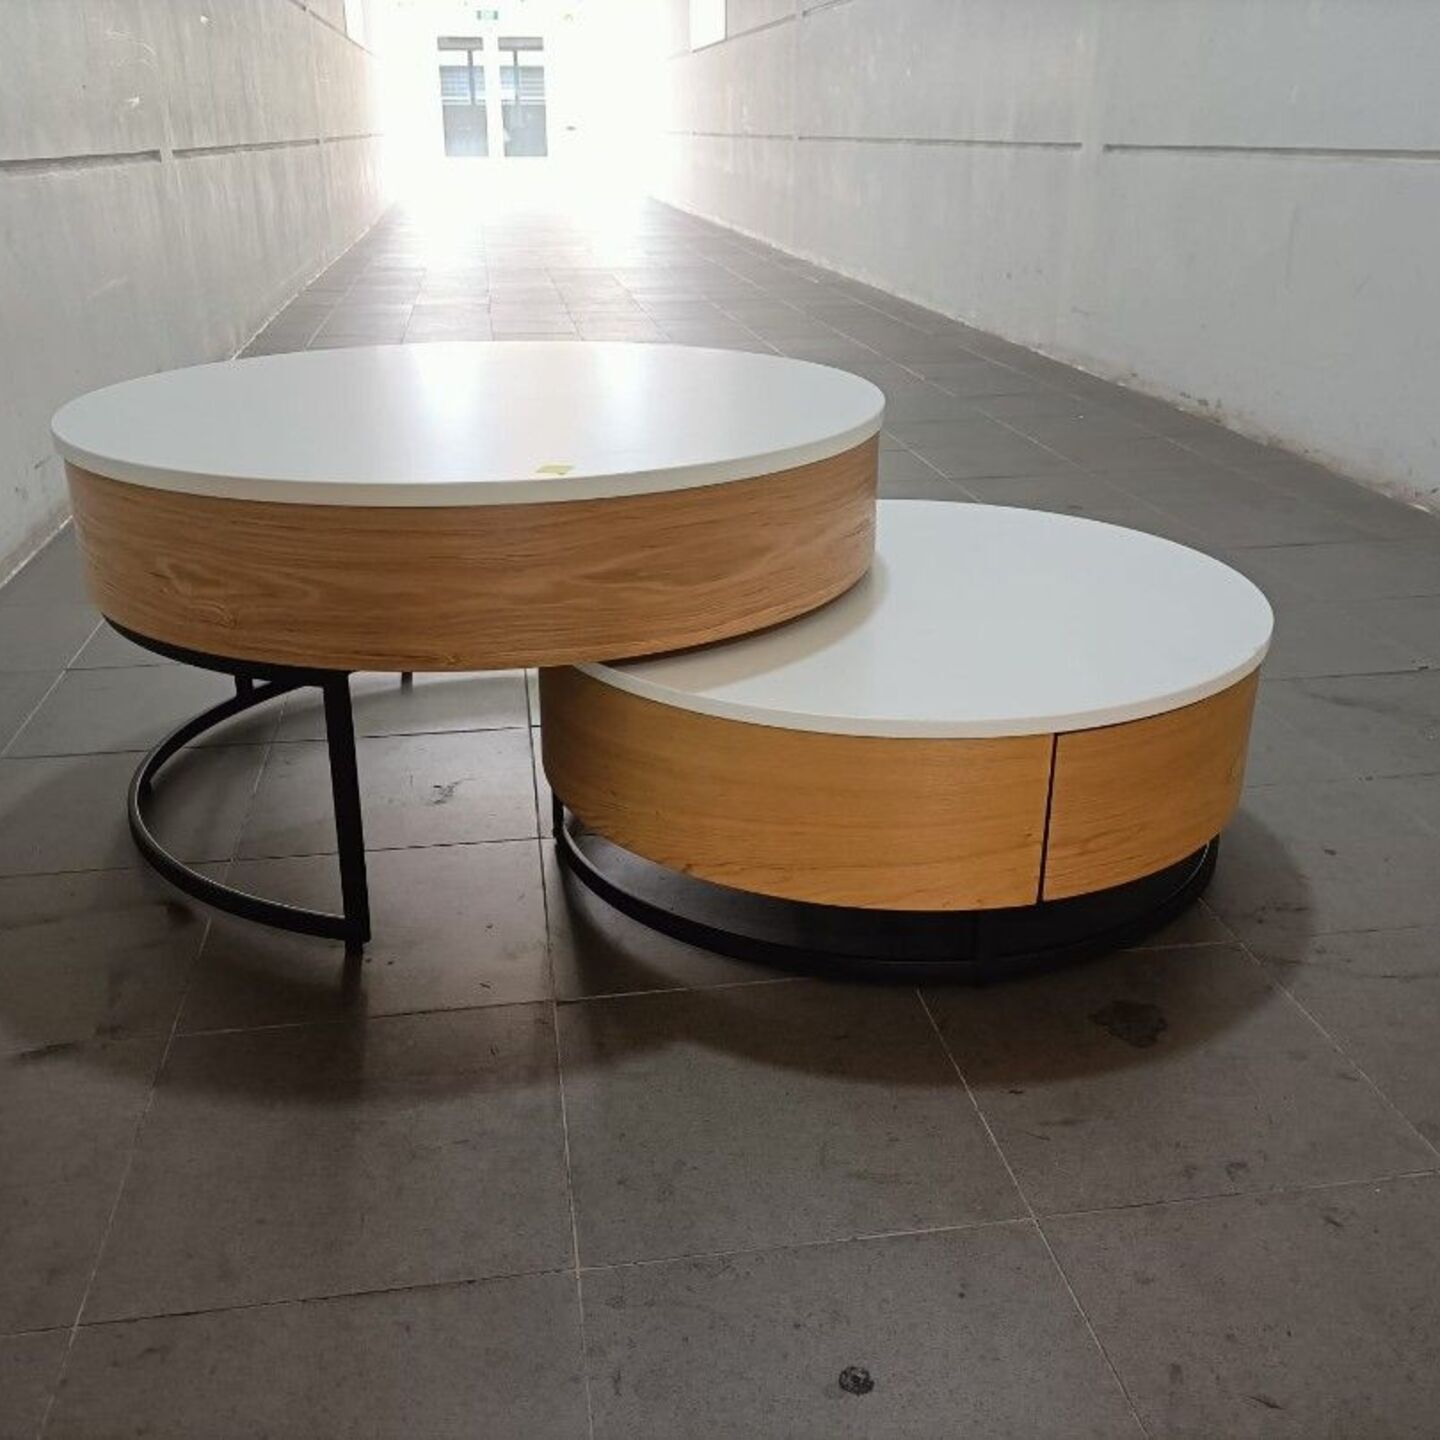 DARIUS Nesting Coffee Table in NATURAL 80cm